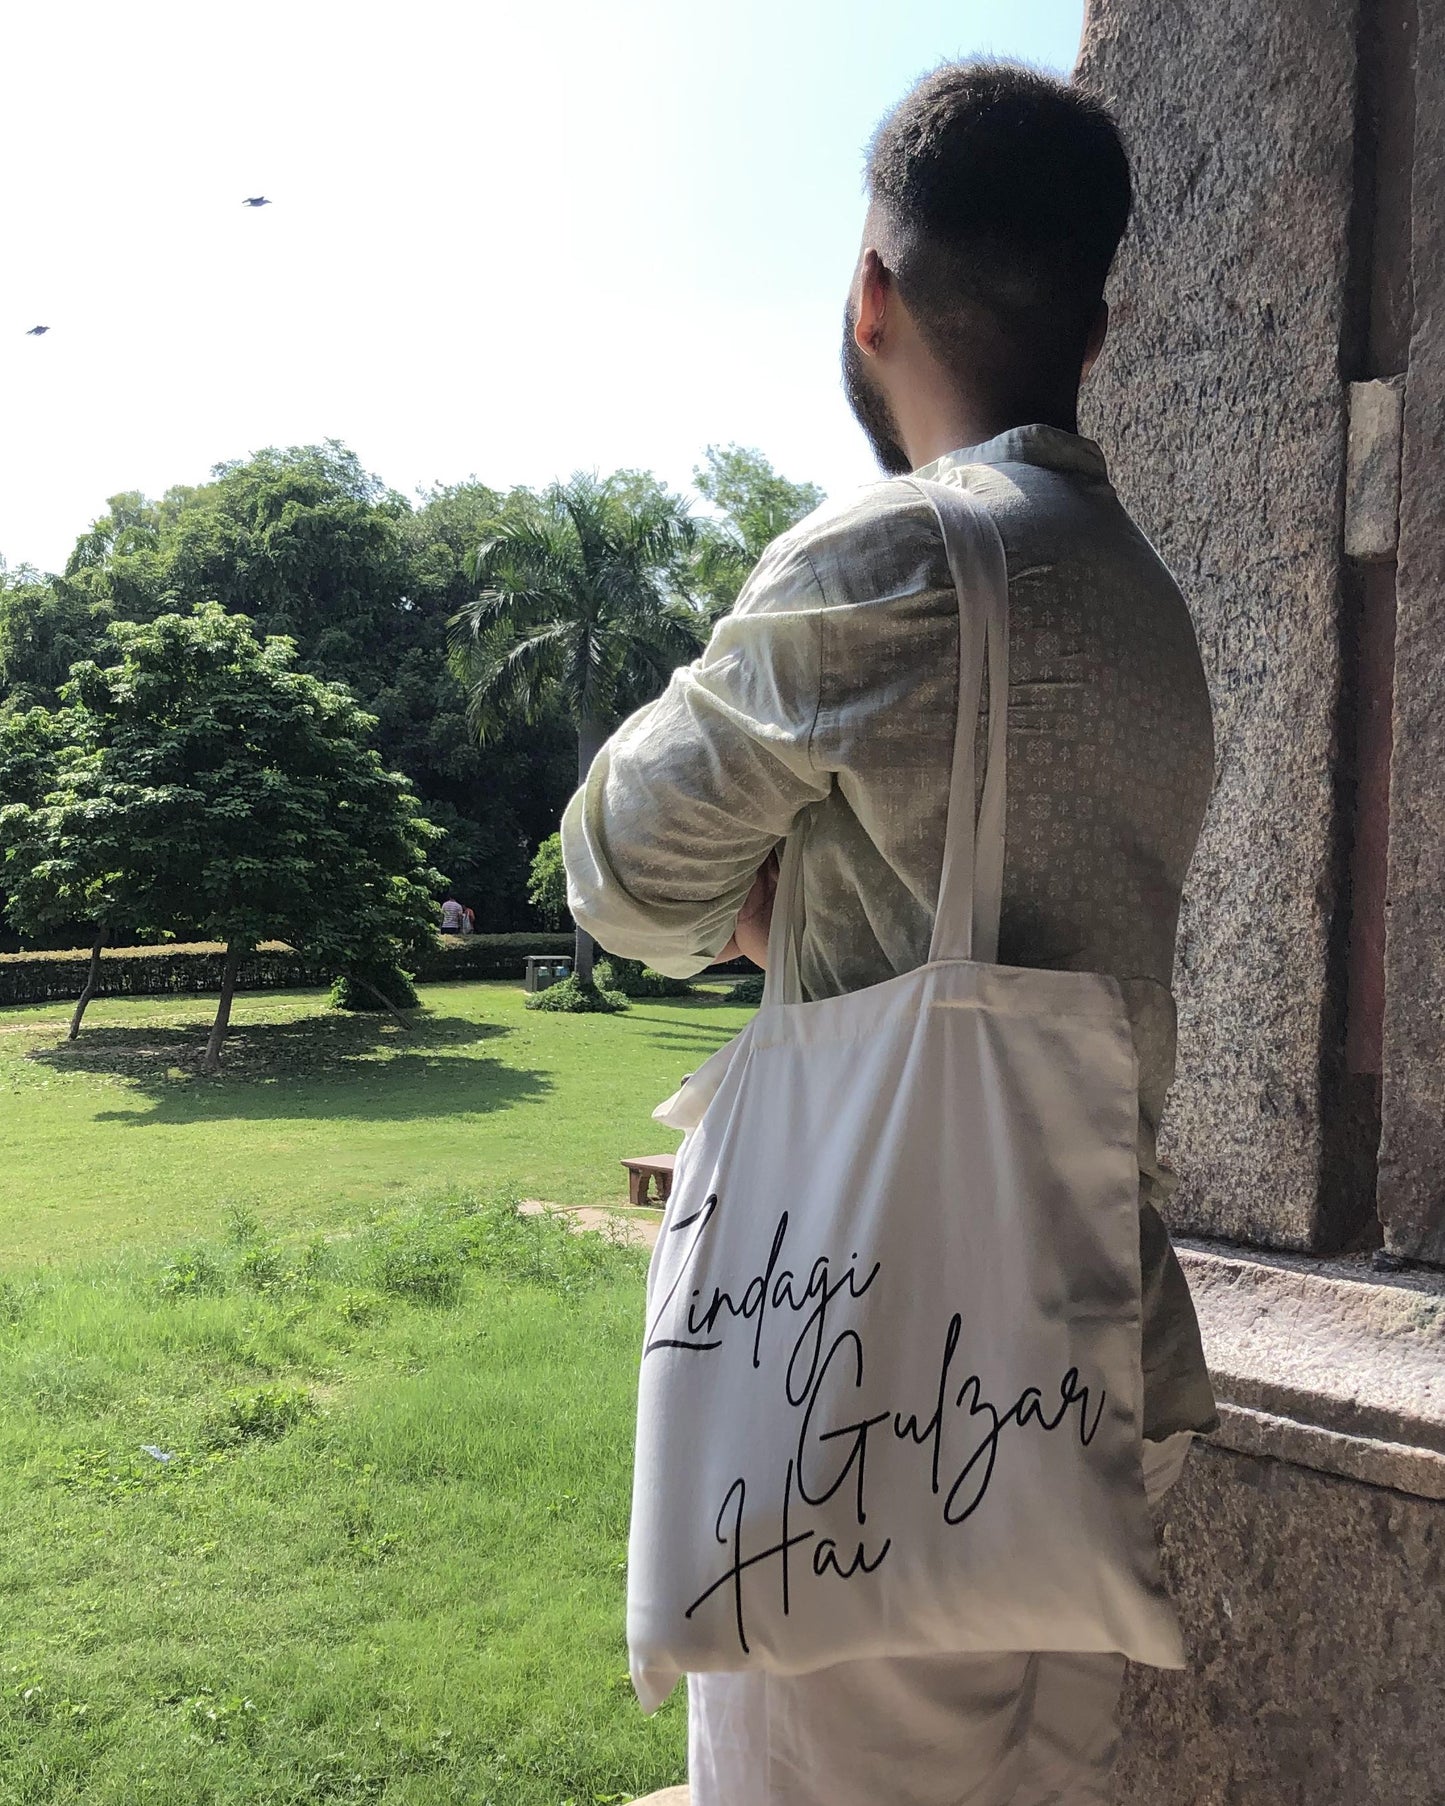 Zindagi Gulzar Hai - Canvas Tote Bags for College